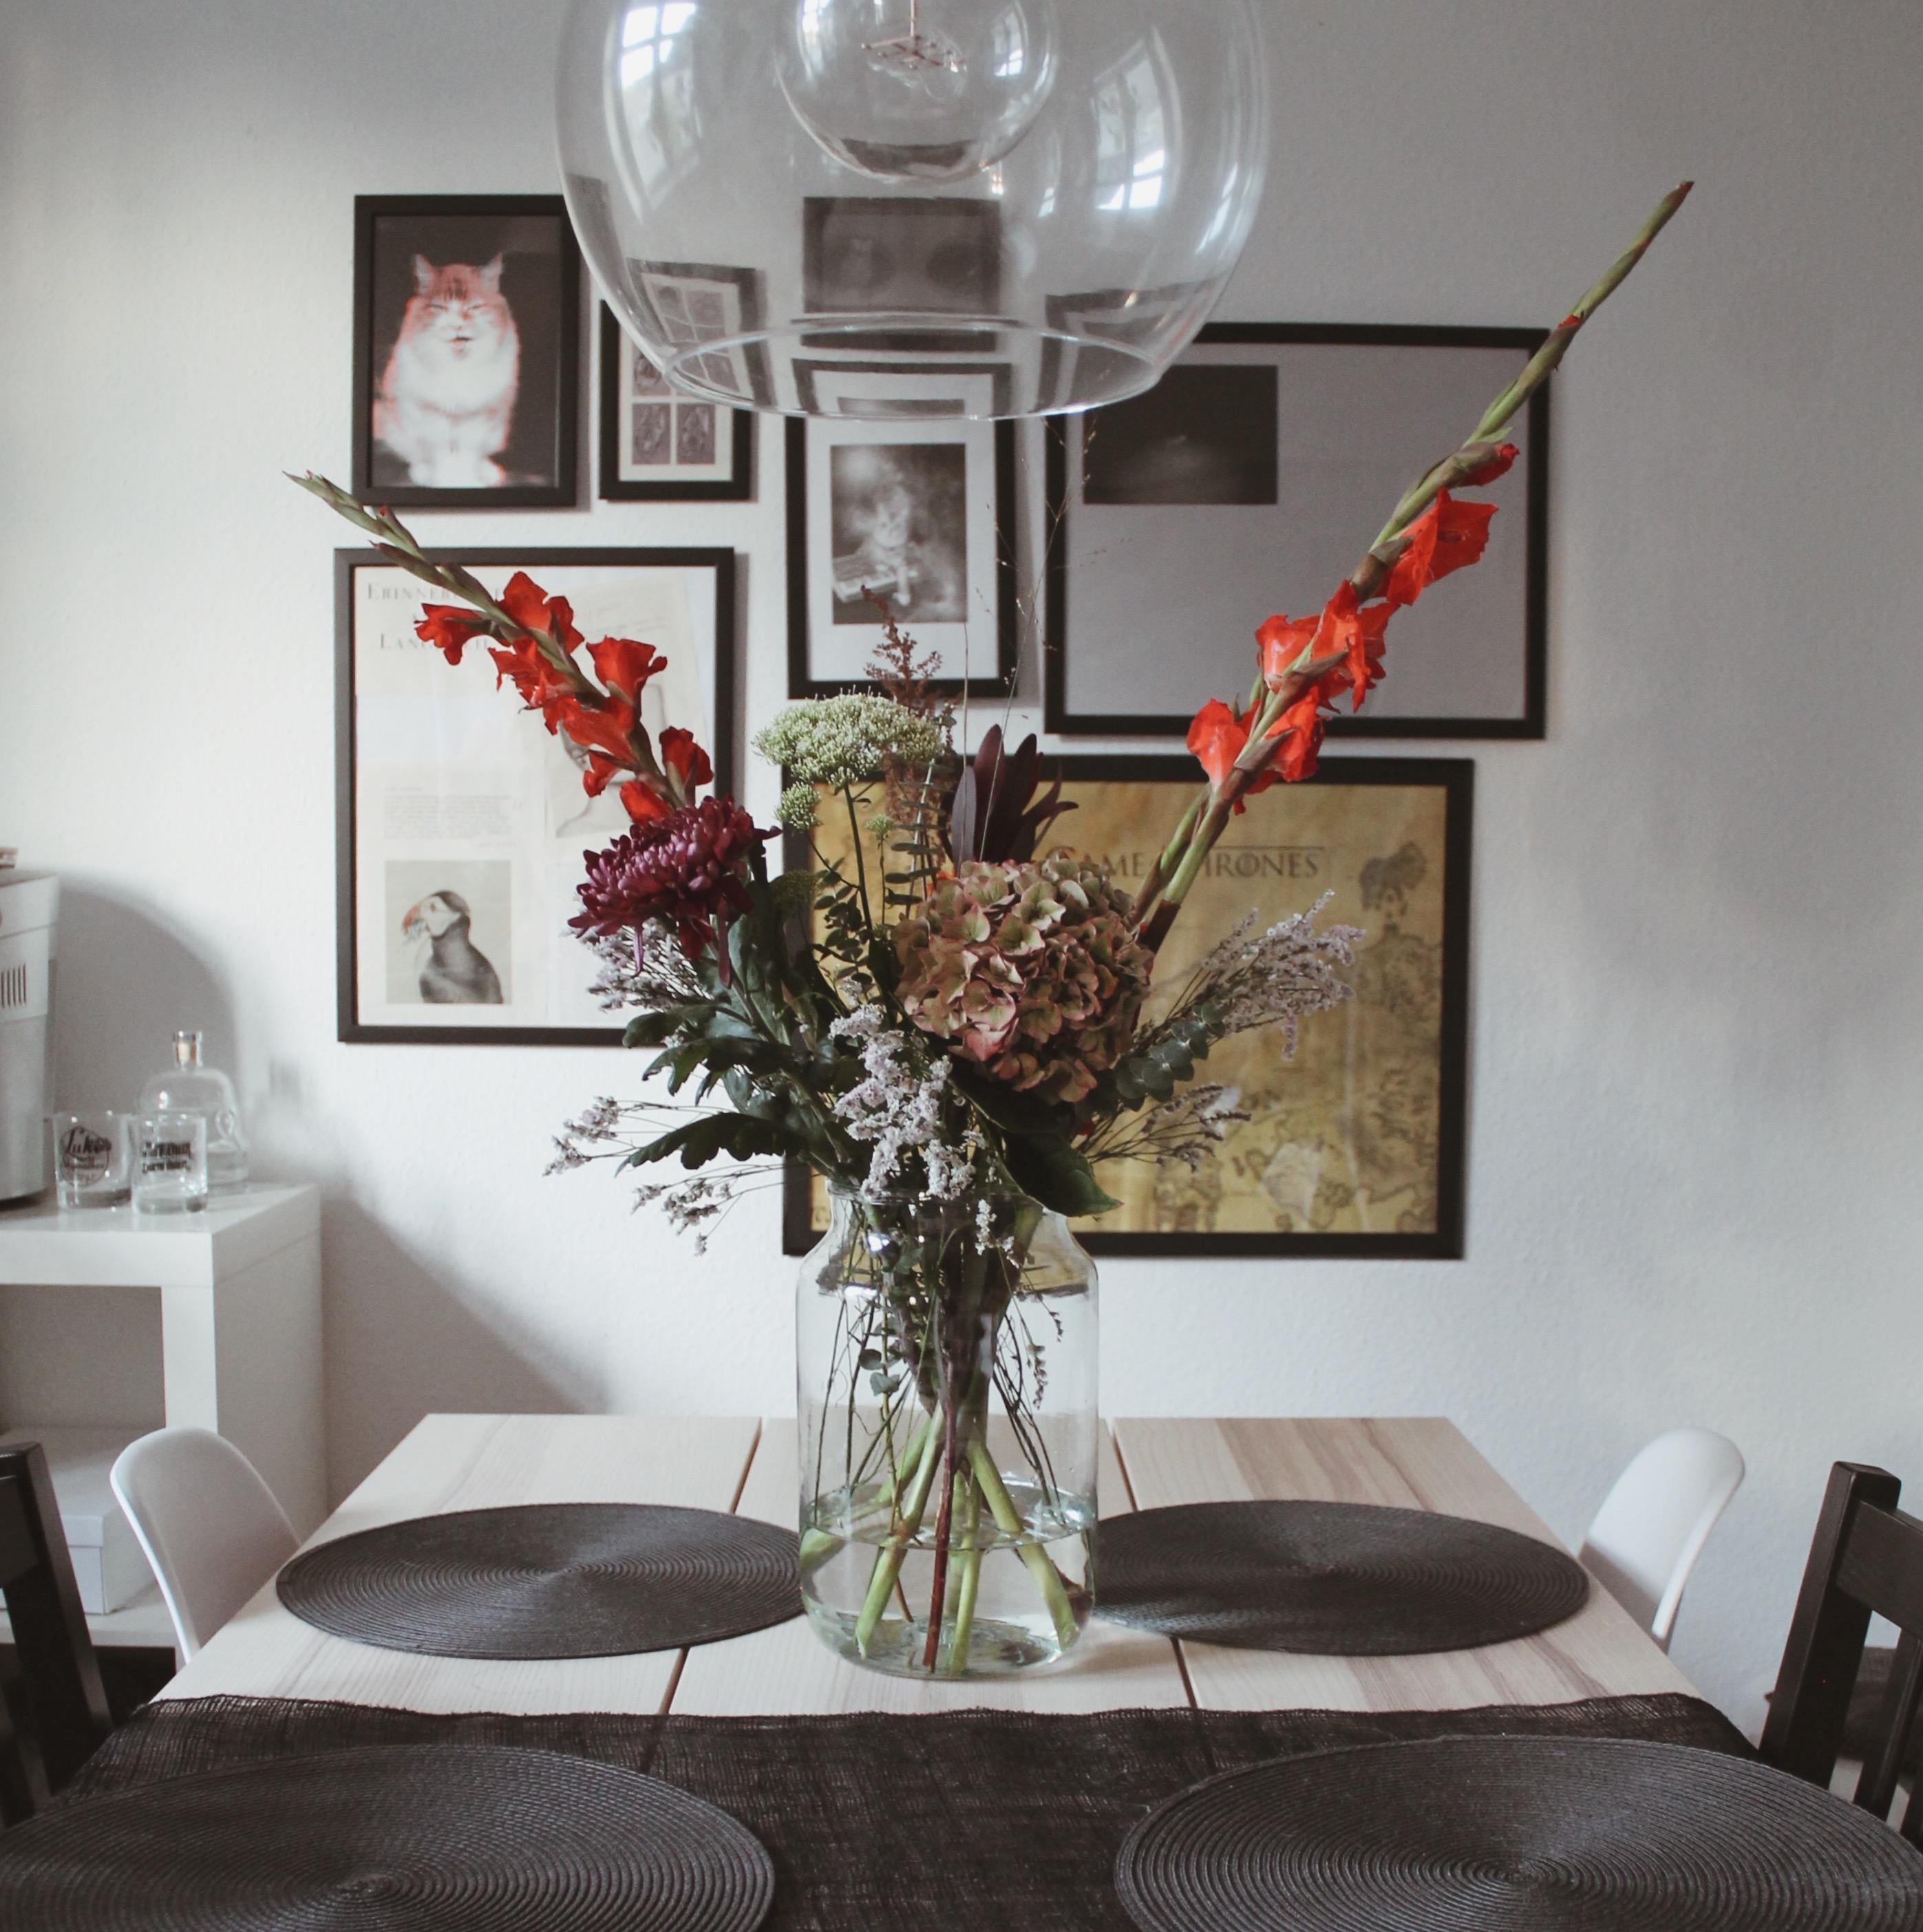 Frische Blumen fürs Herbstfeeling 🍂
#livingroom #couchstyle #blumen #flowers #gallerywall #lights #skandinavisch #ikea